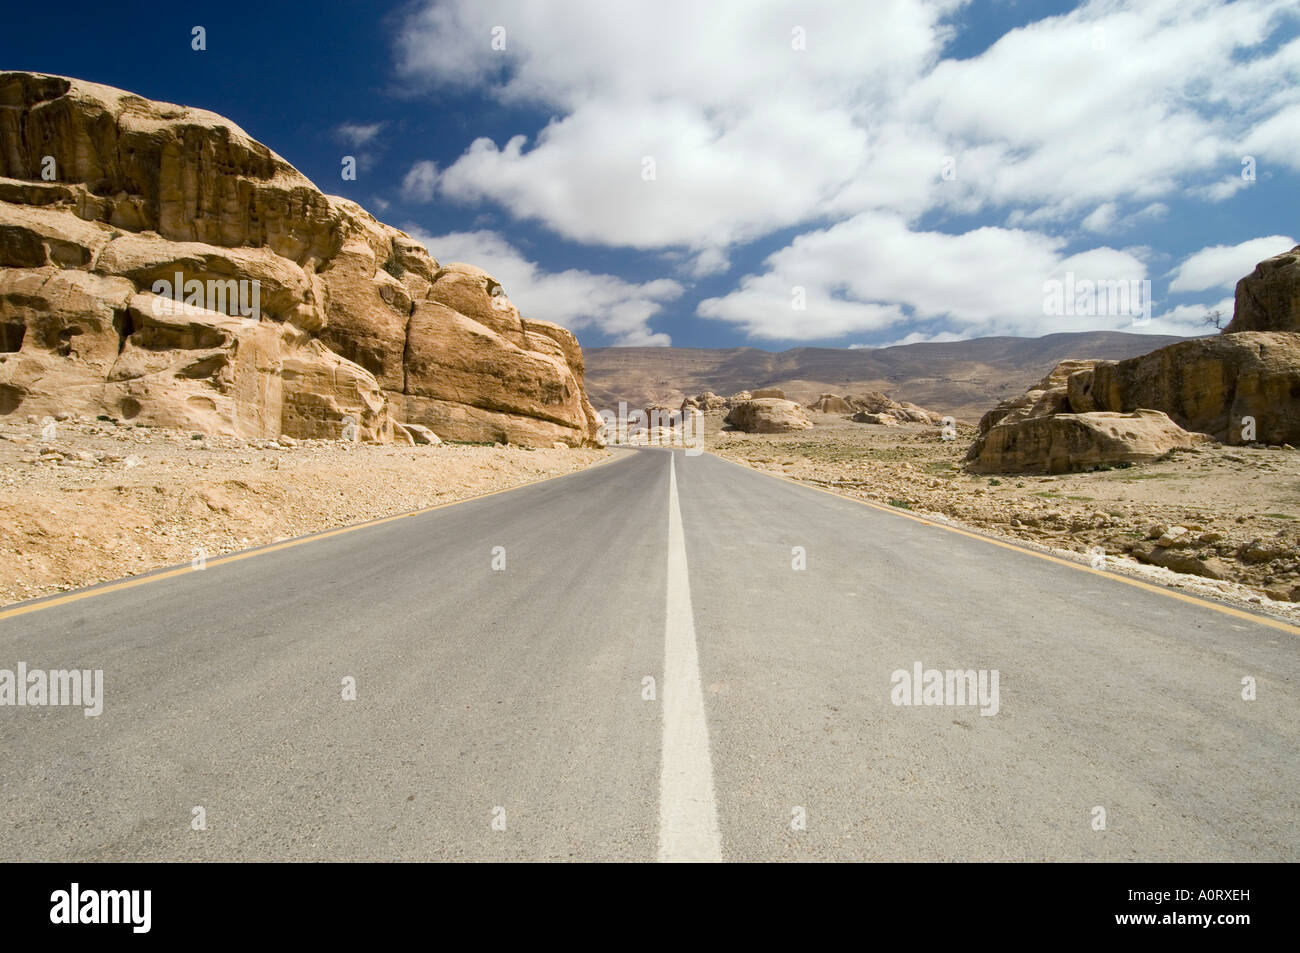 Road through rocky landscape Jordan Middle East Stock Photo